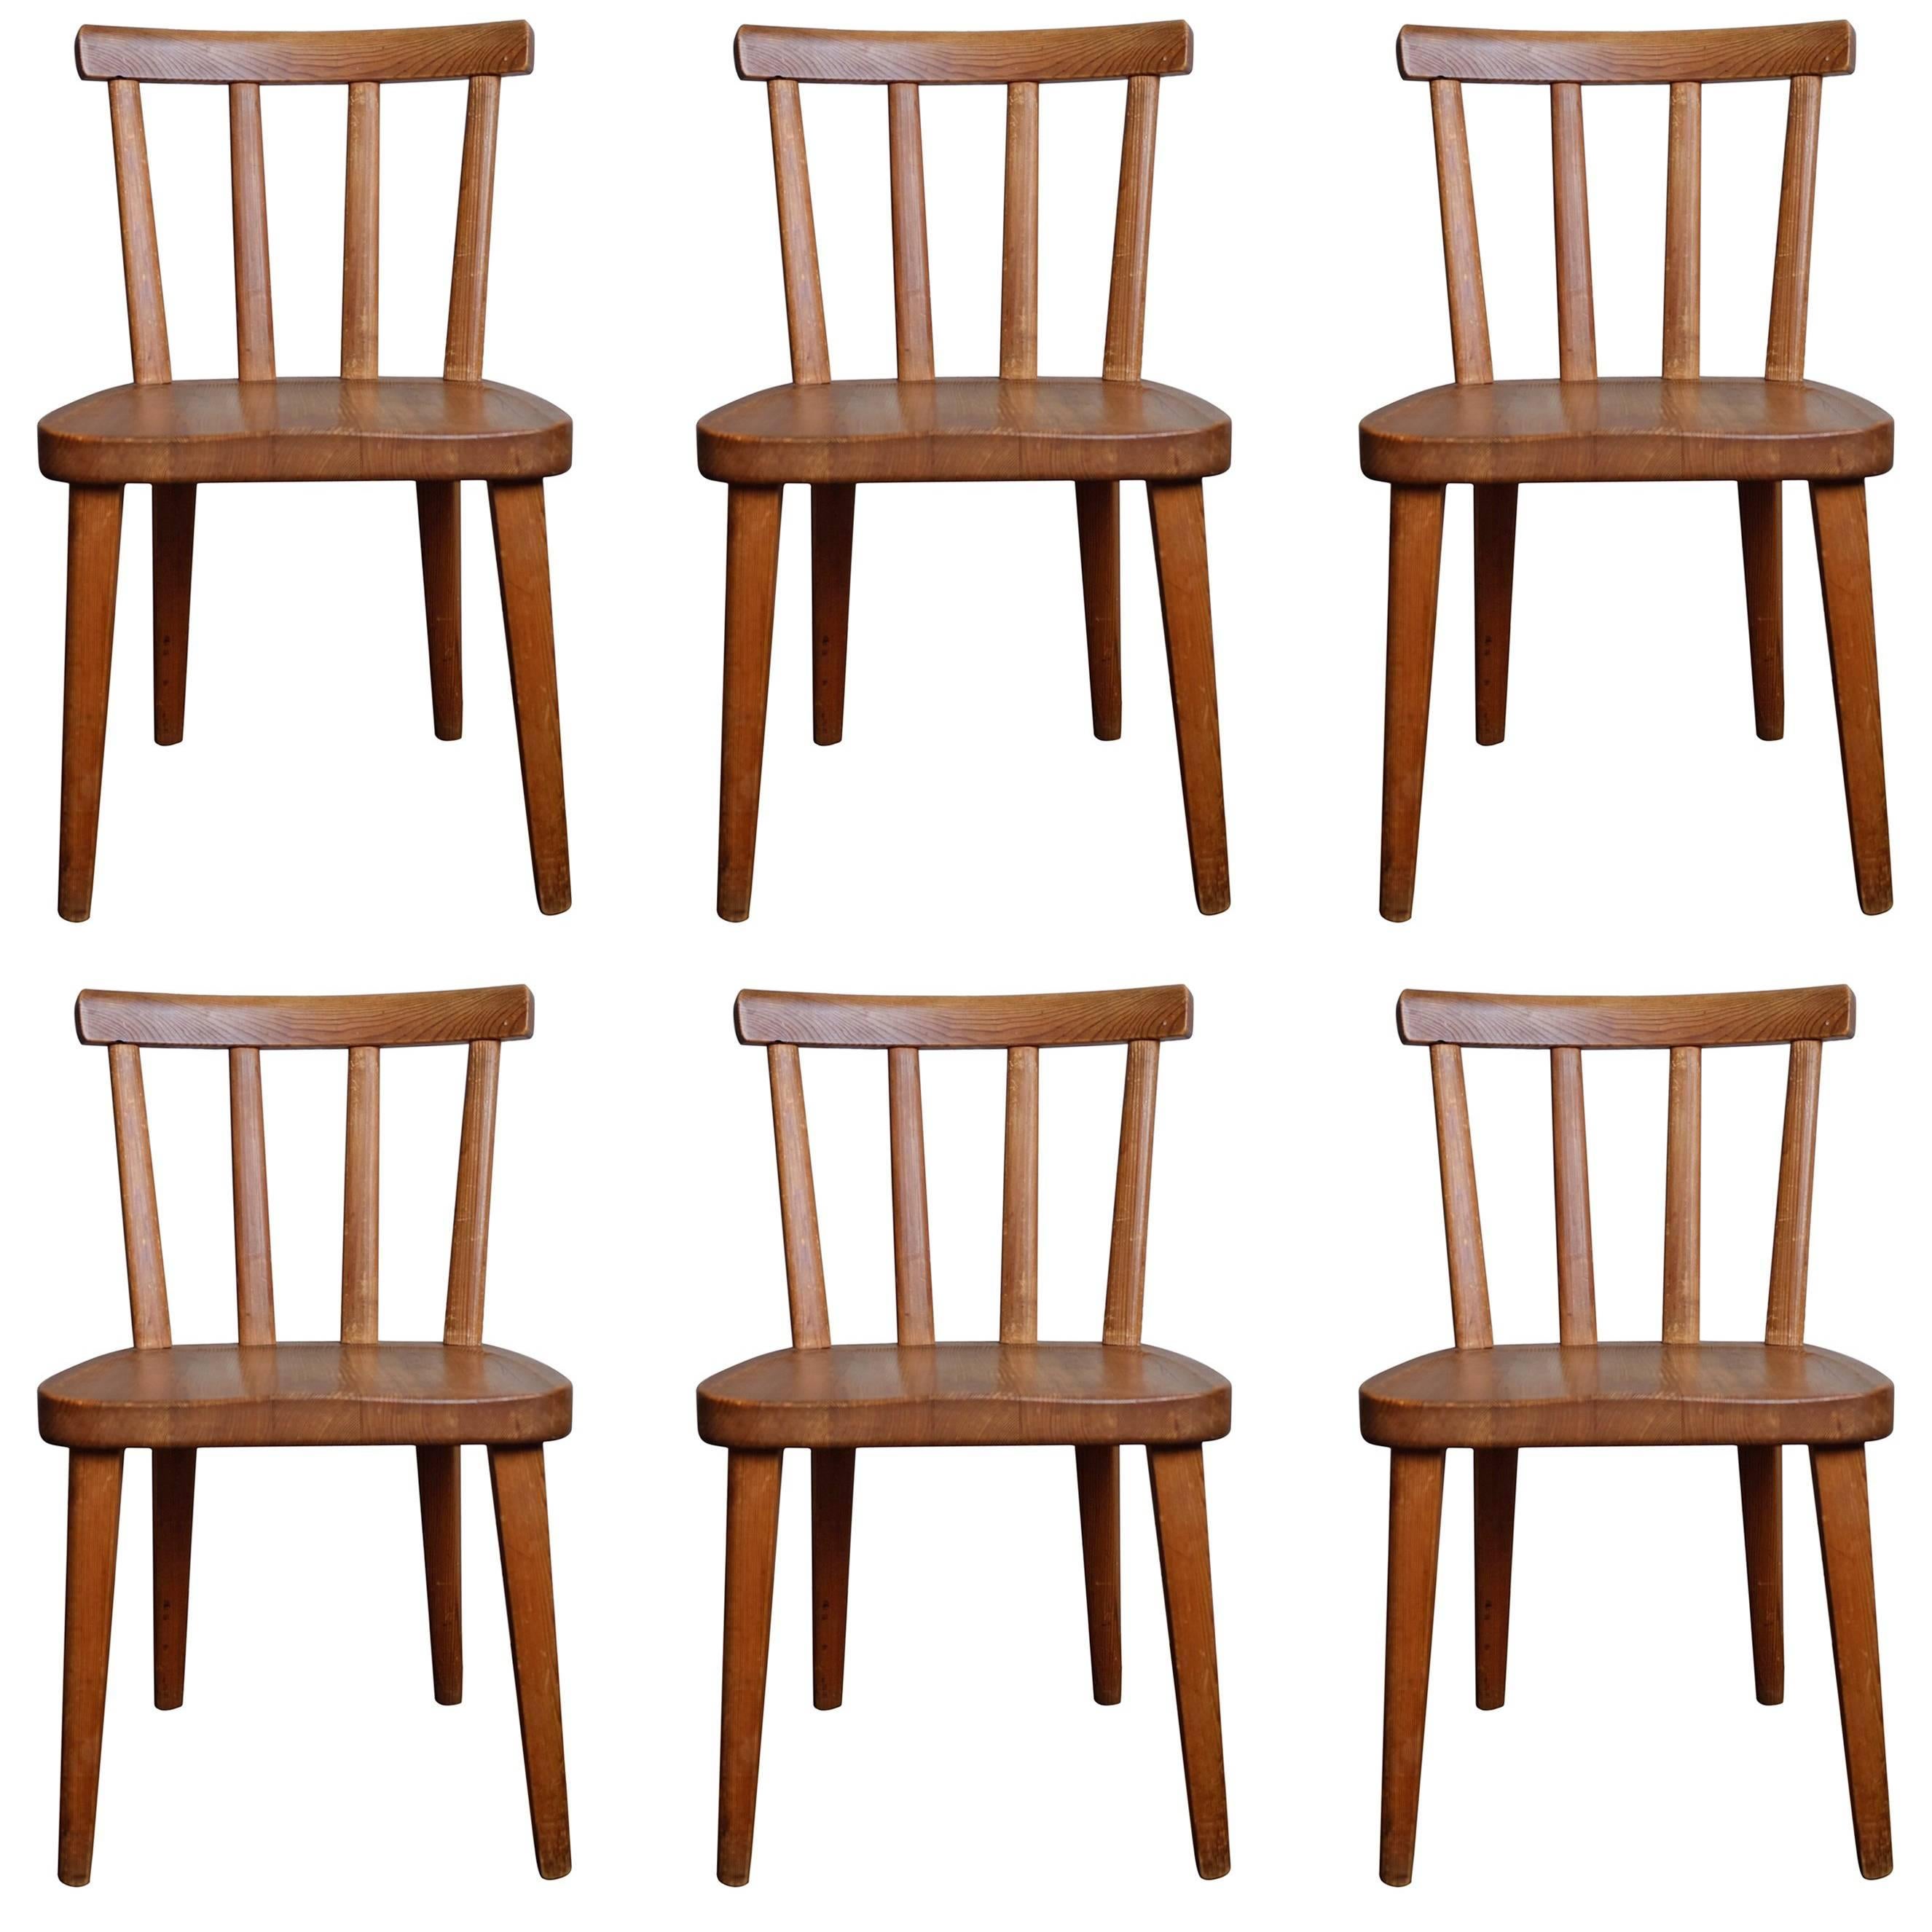 Set of Six "Utö" Chairs by Axel Einar Hjorth, 1930s